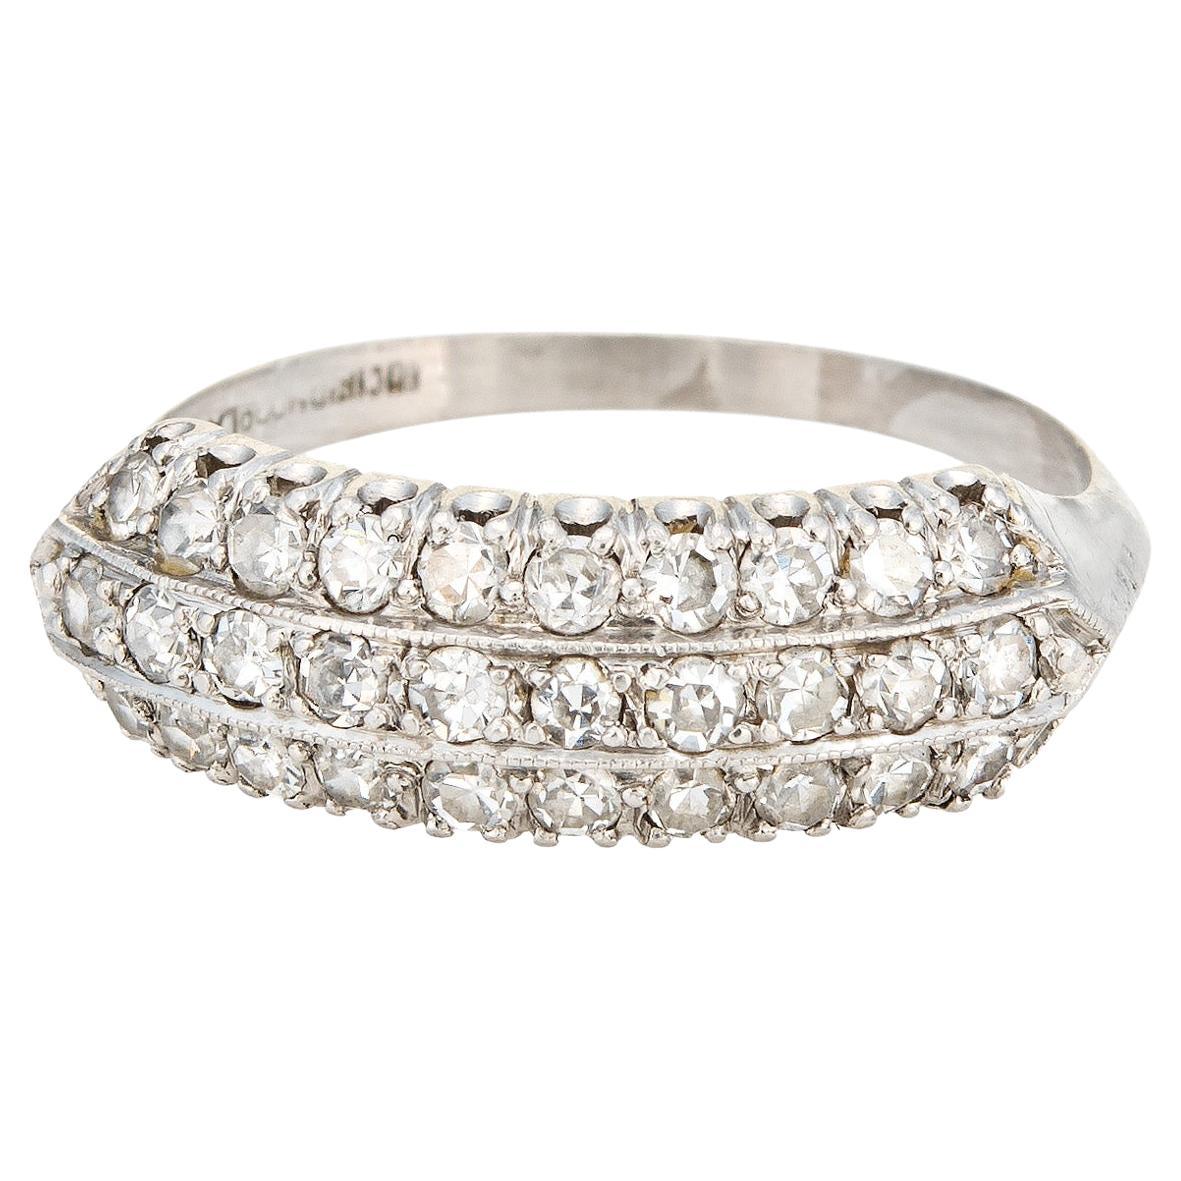 Vintage Art Deco Diamond Ring Platinum Anniversary Band 3 Row Sz 7 Jewelry